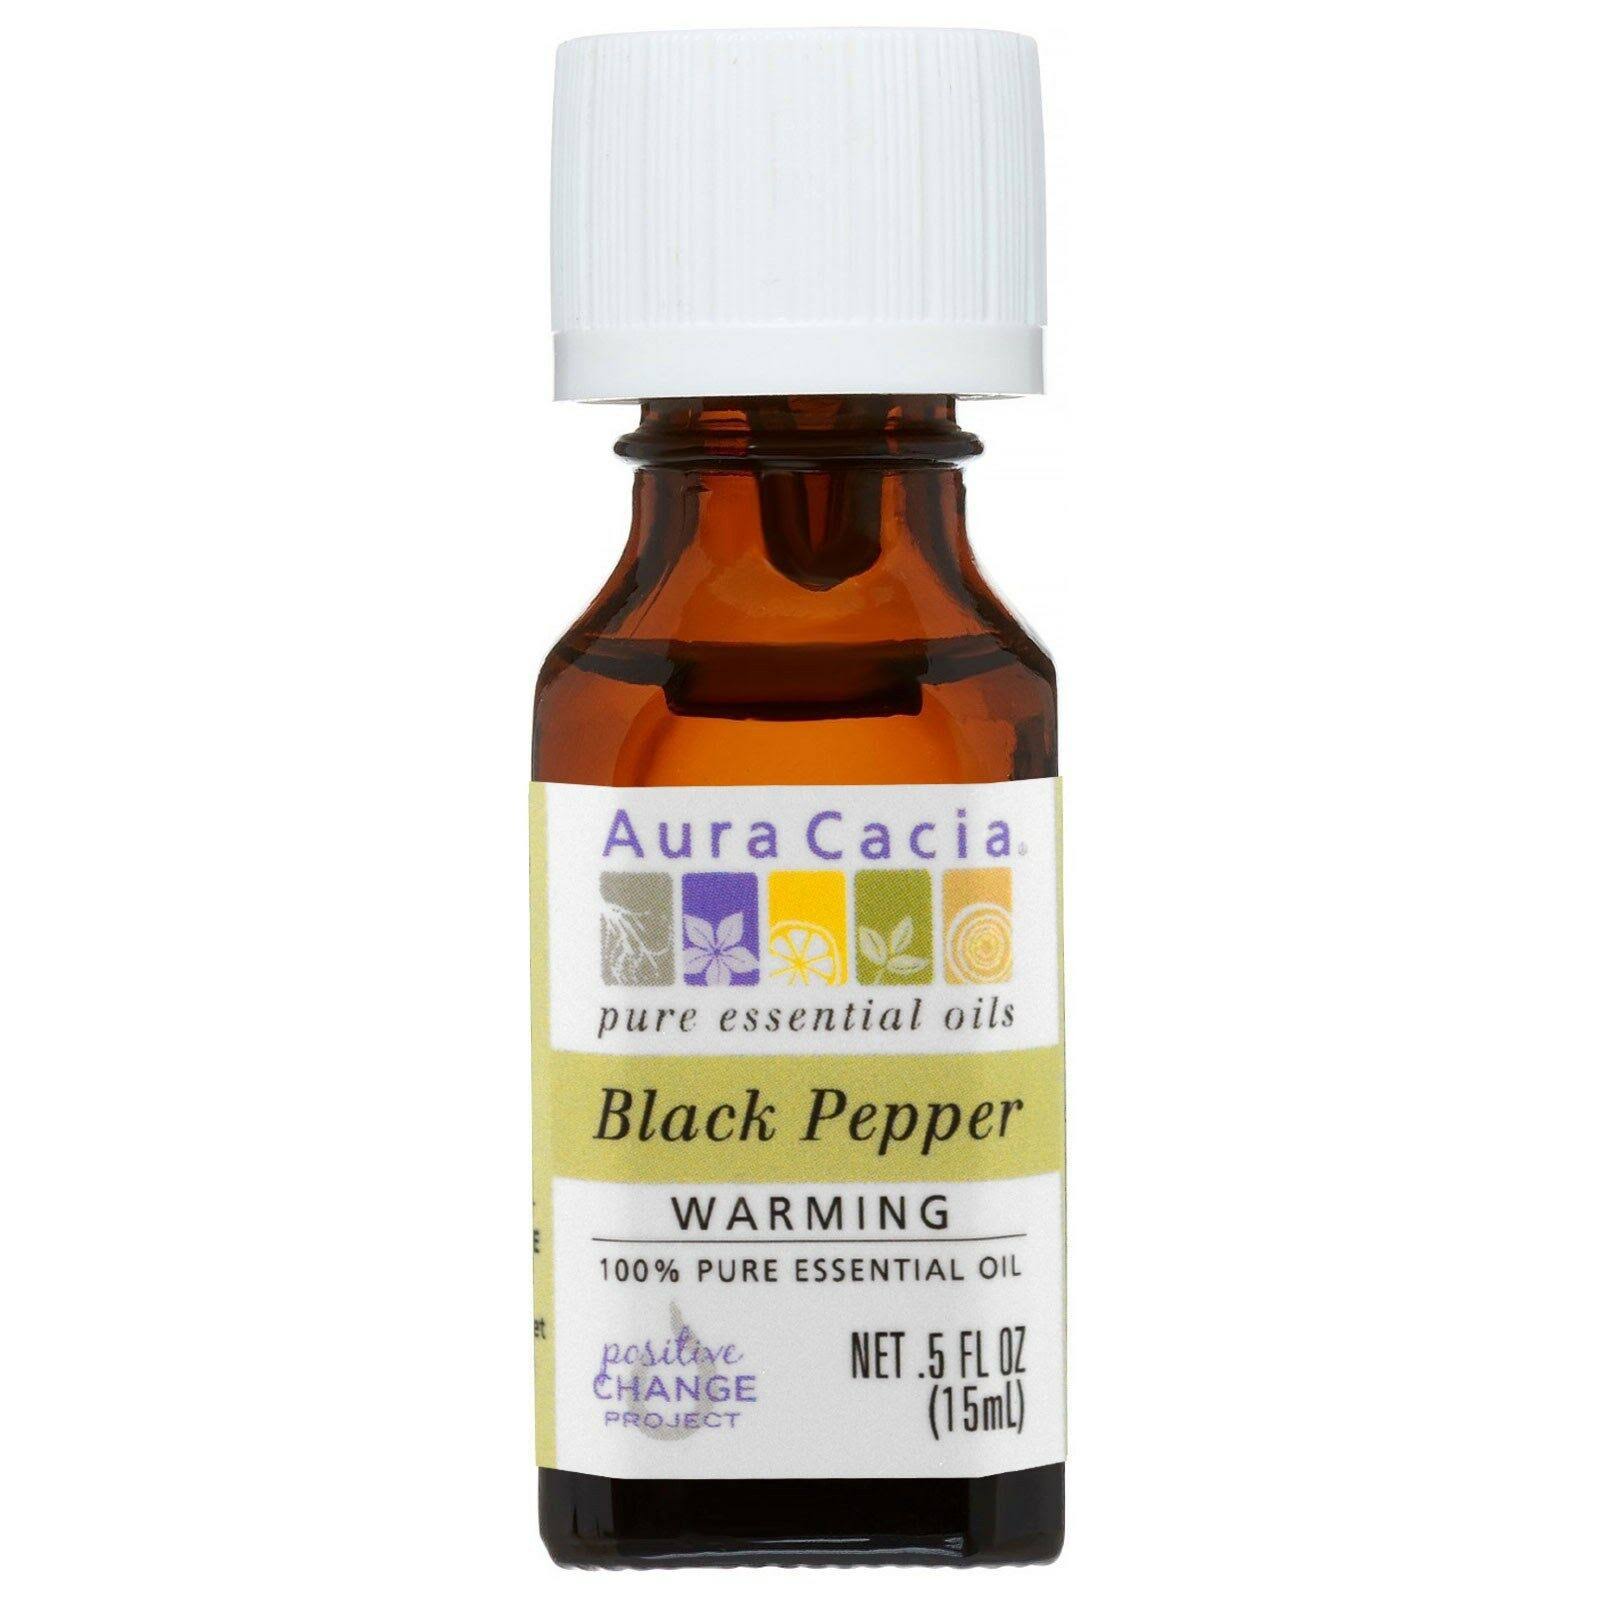 Aura Cacia Black Pepper Essential Oil - 0.5oz